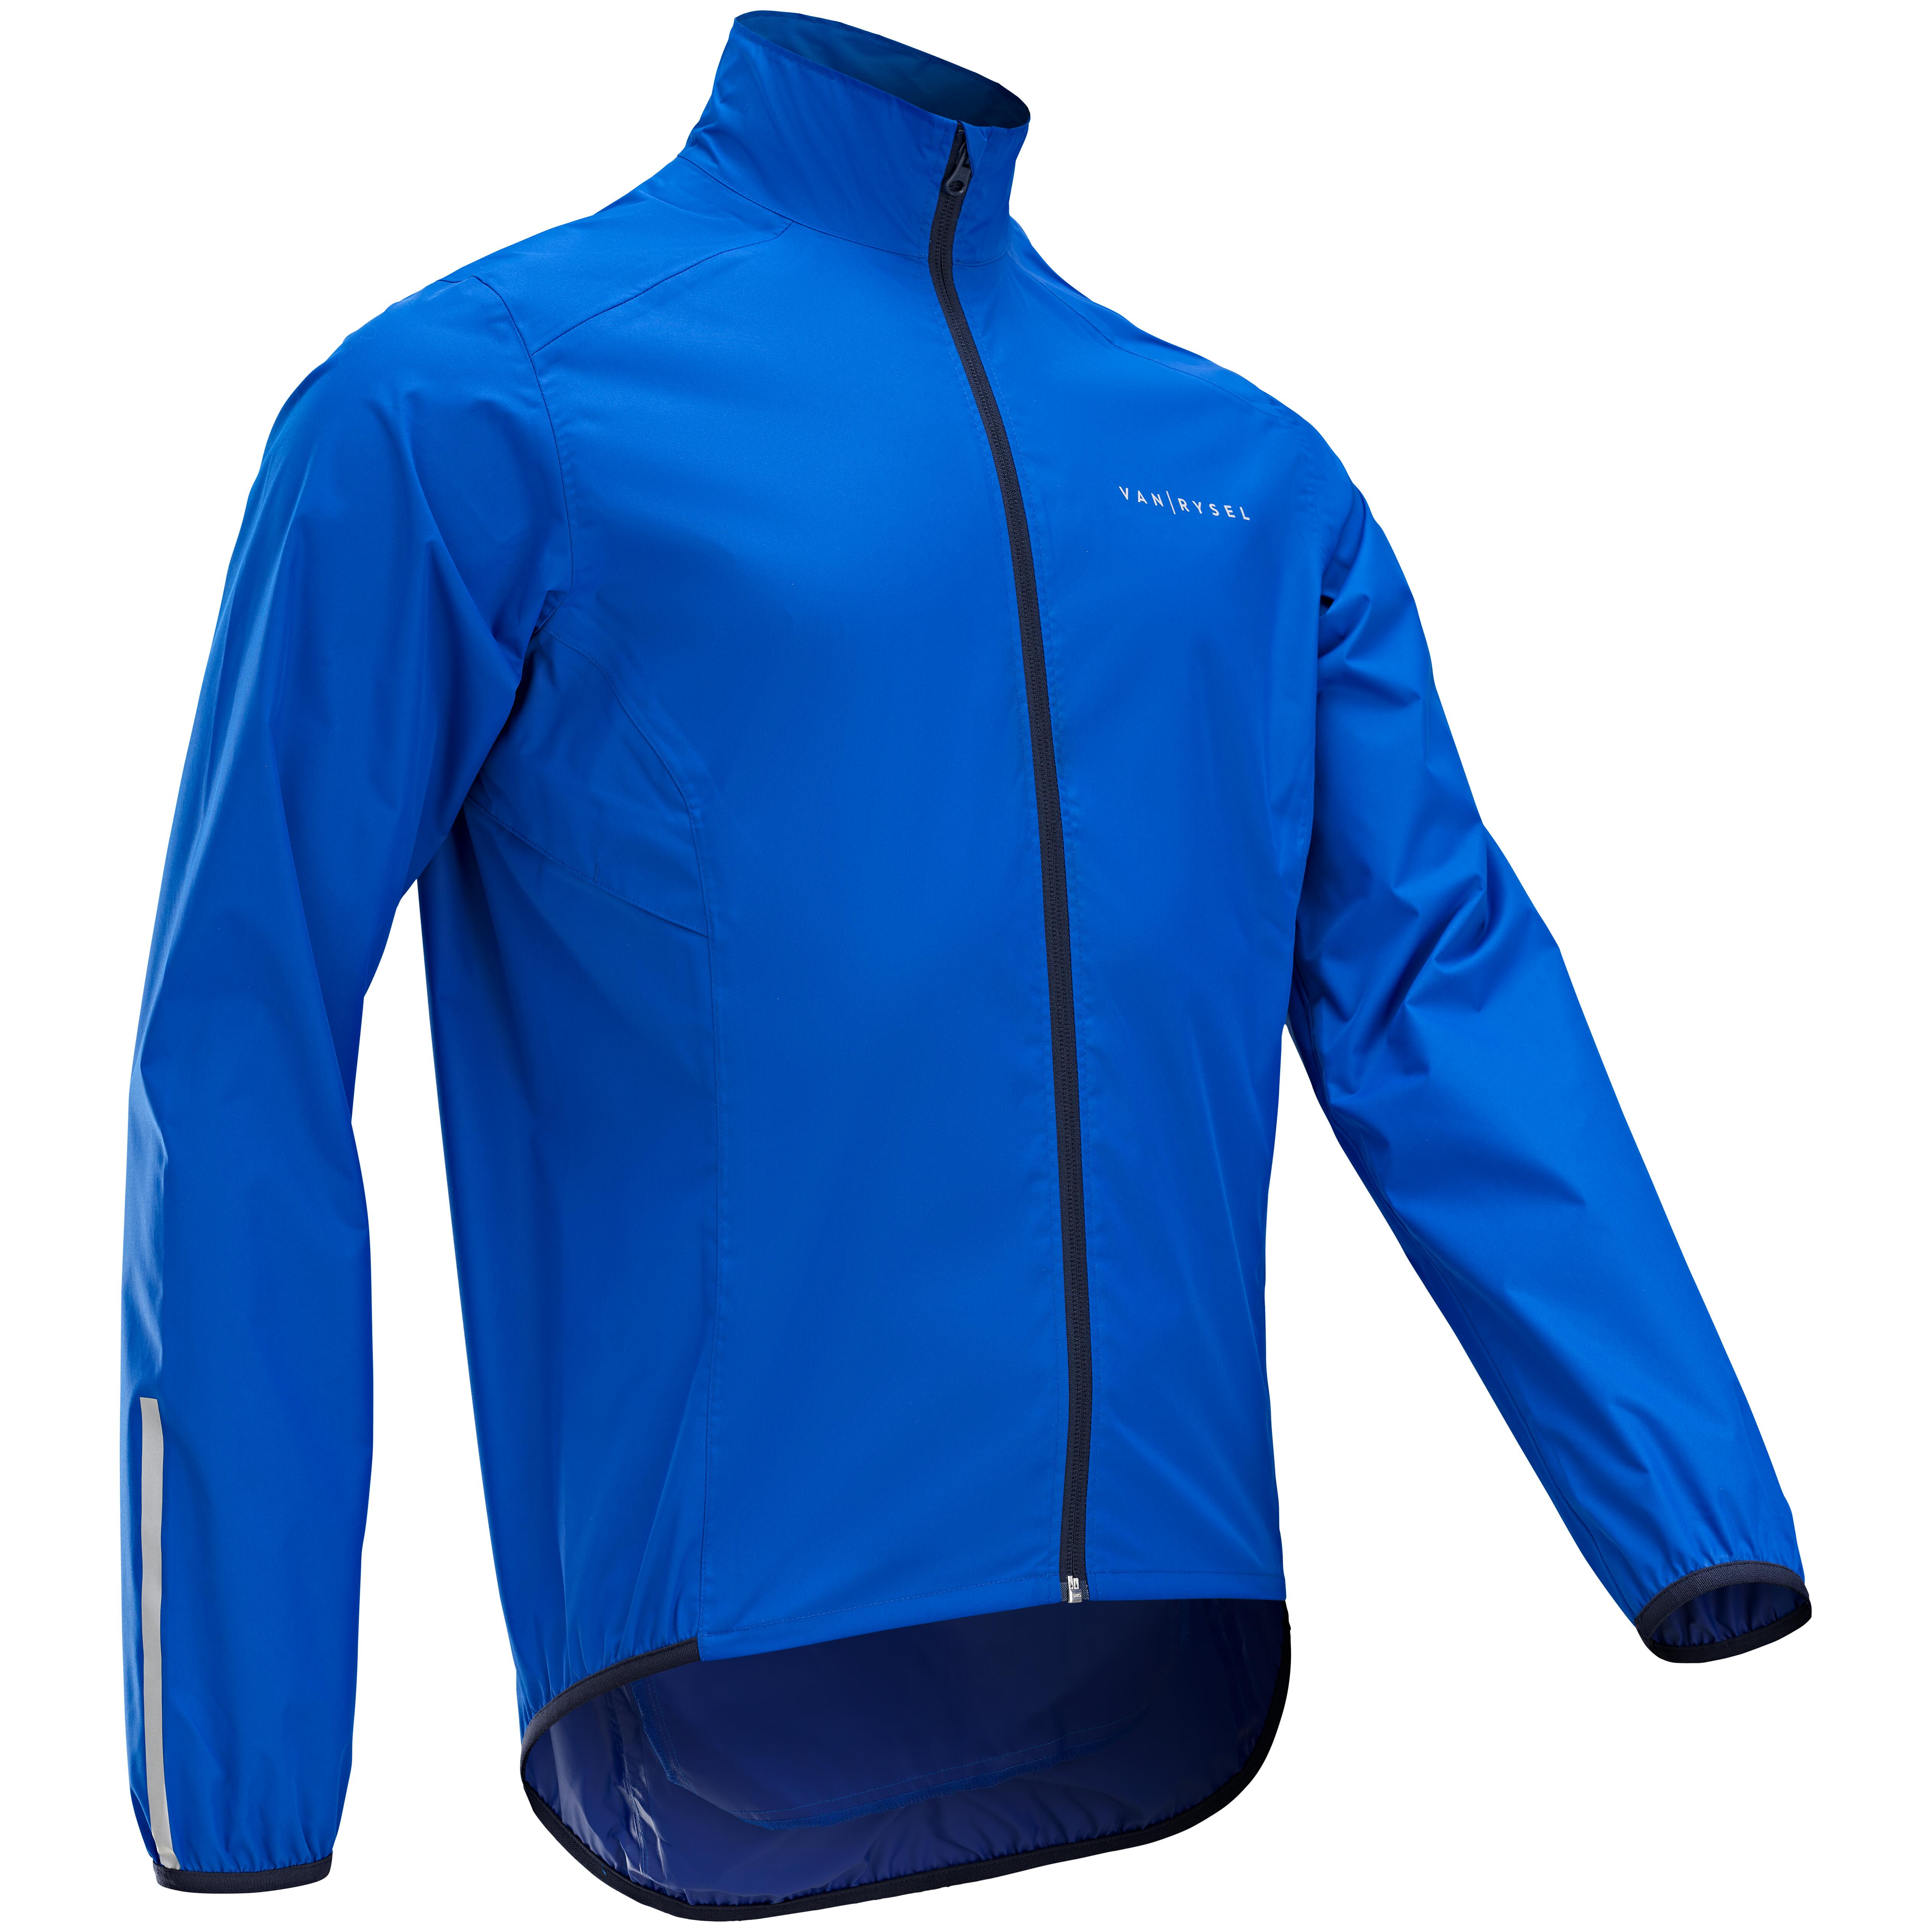 Crivit Jacket Packamack Rain Jacket Blue Cycling Bike Windproof